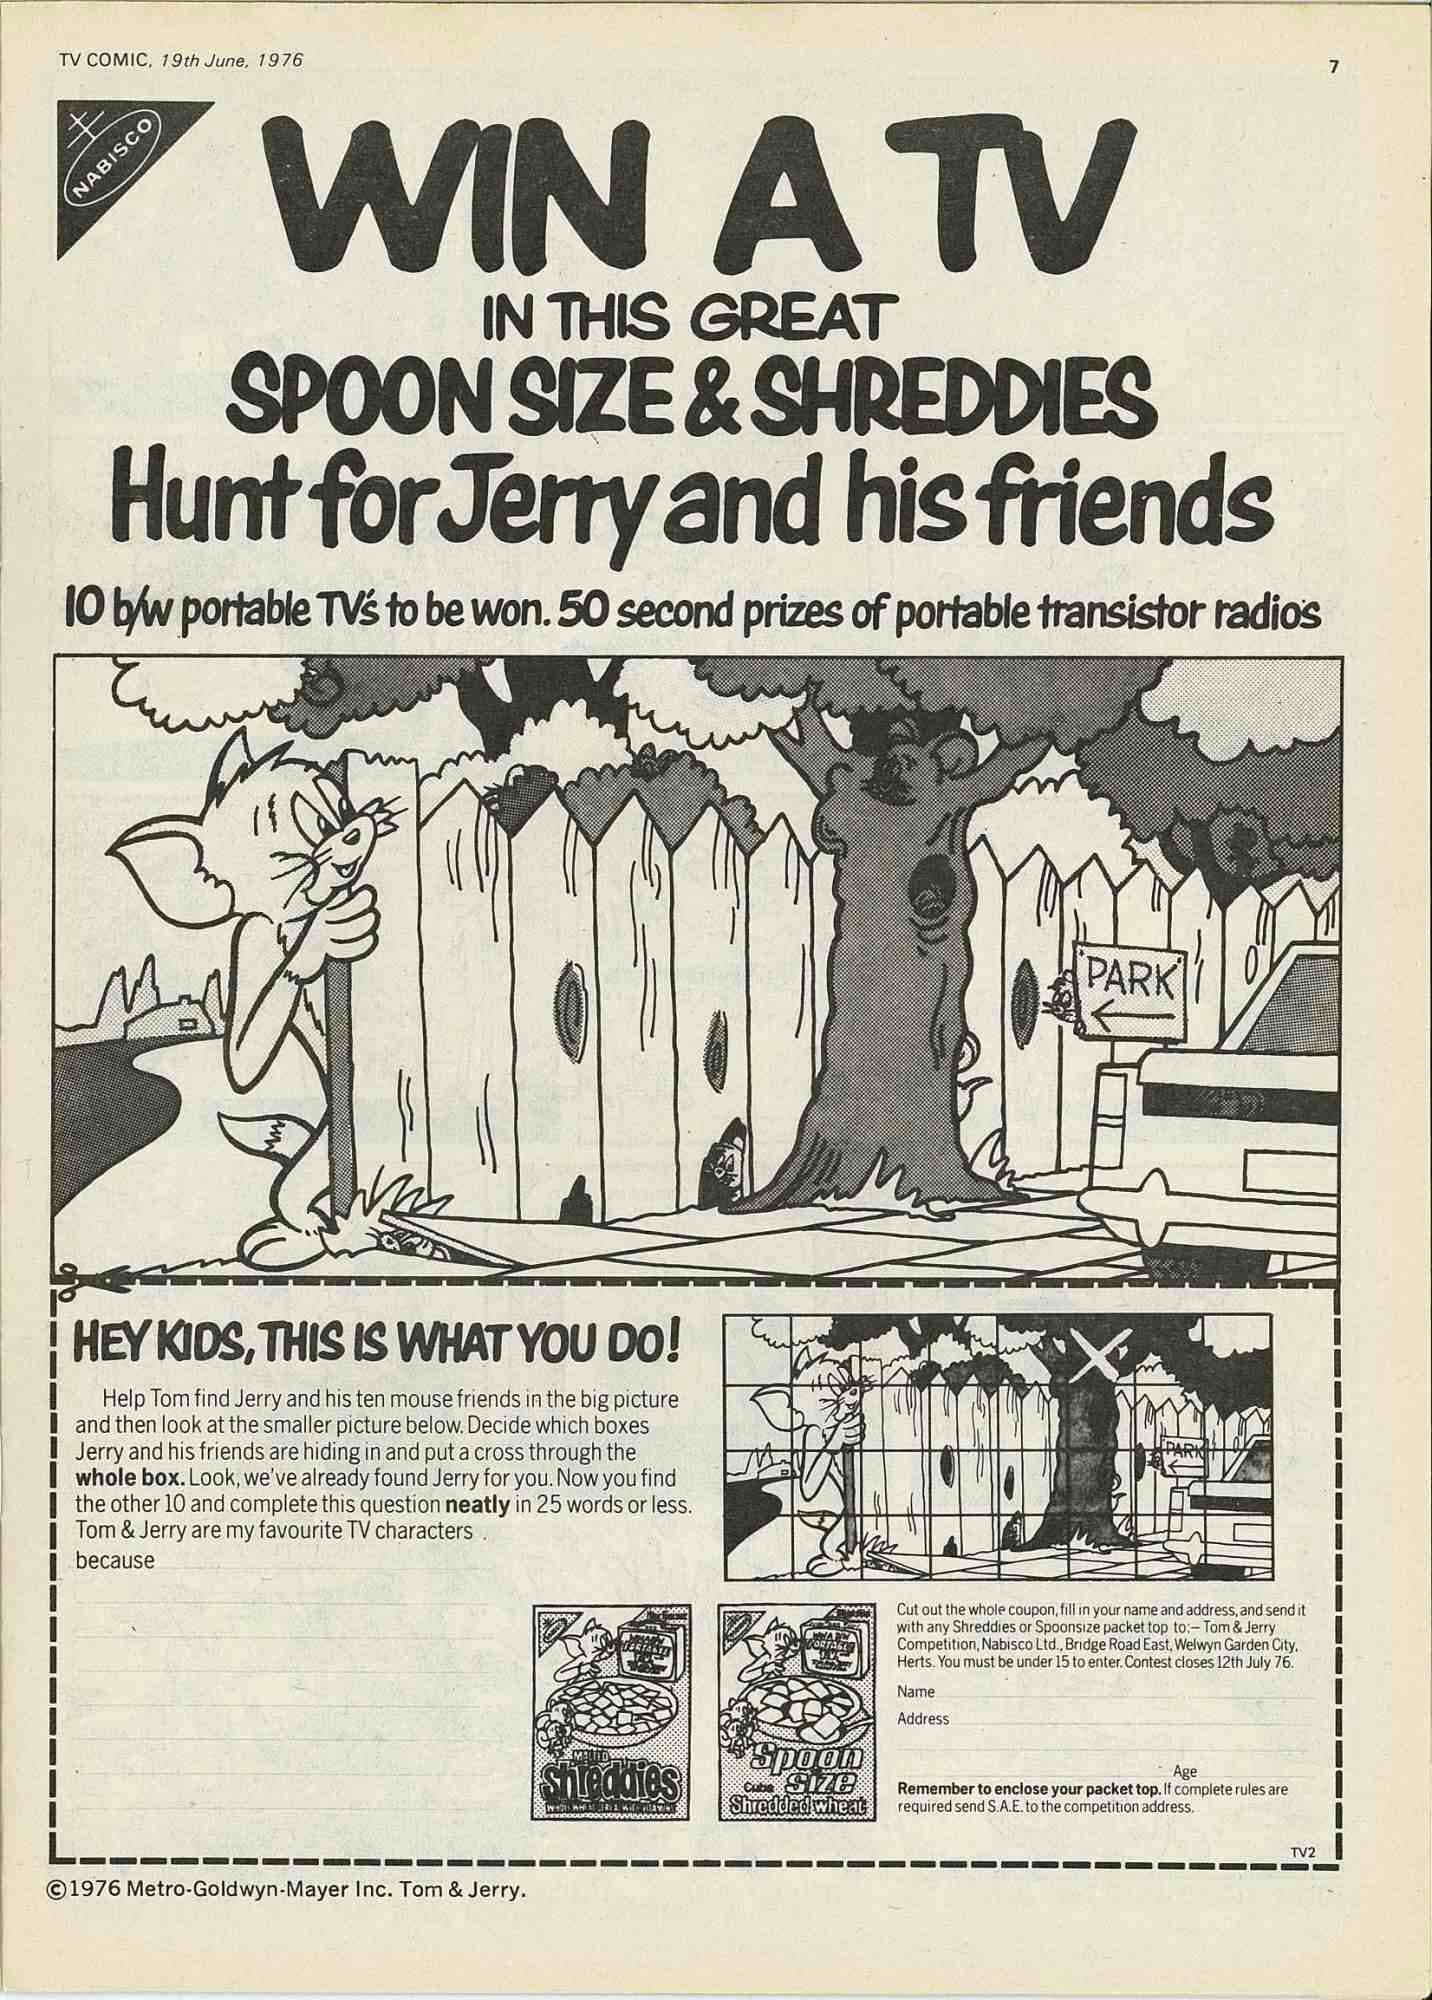 1976 Shreddies TV Competition